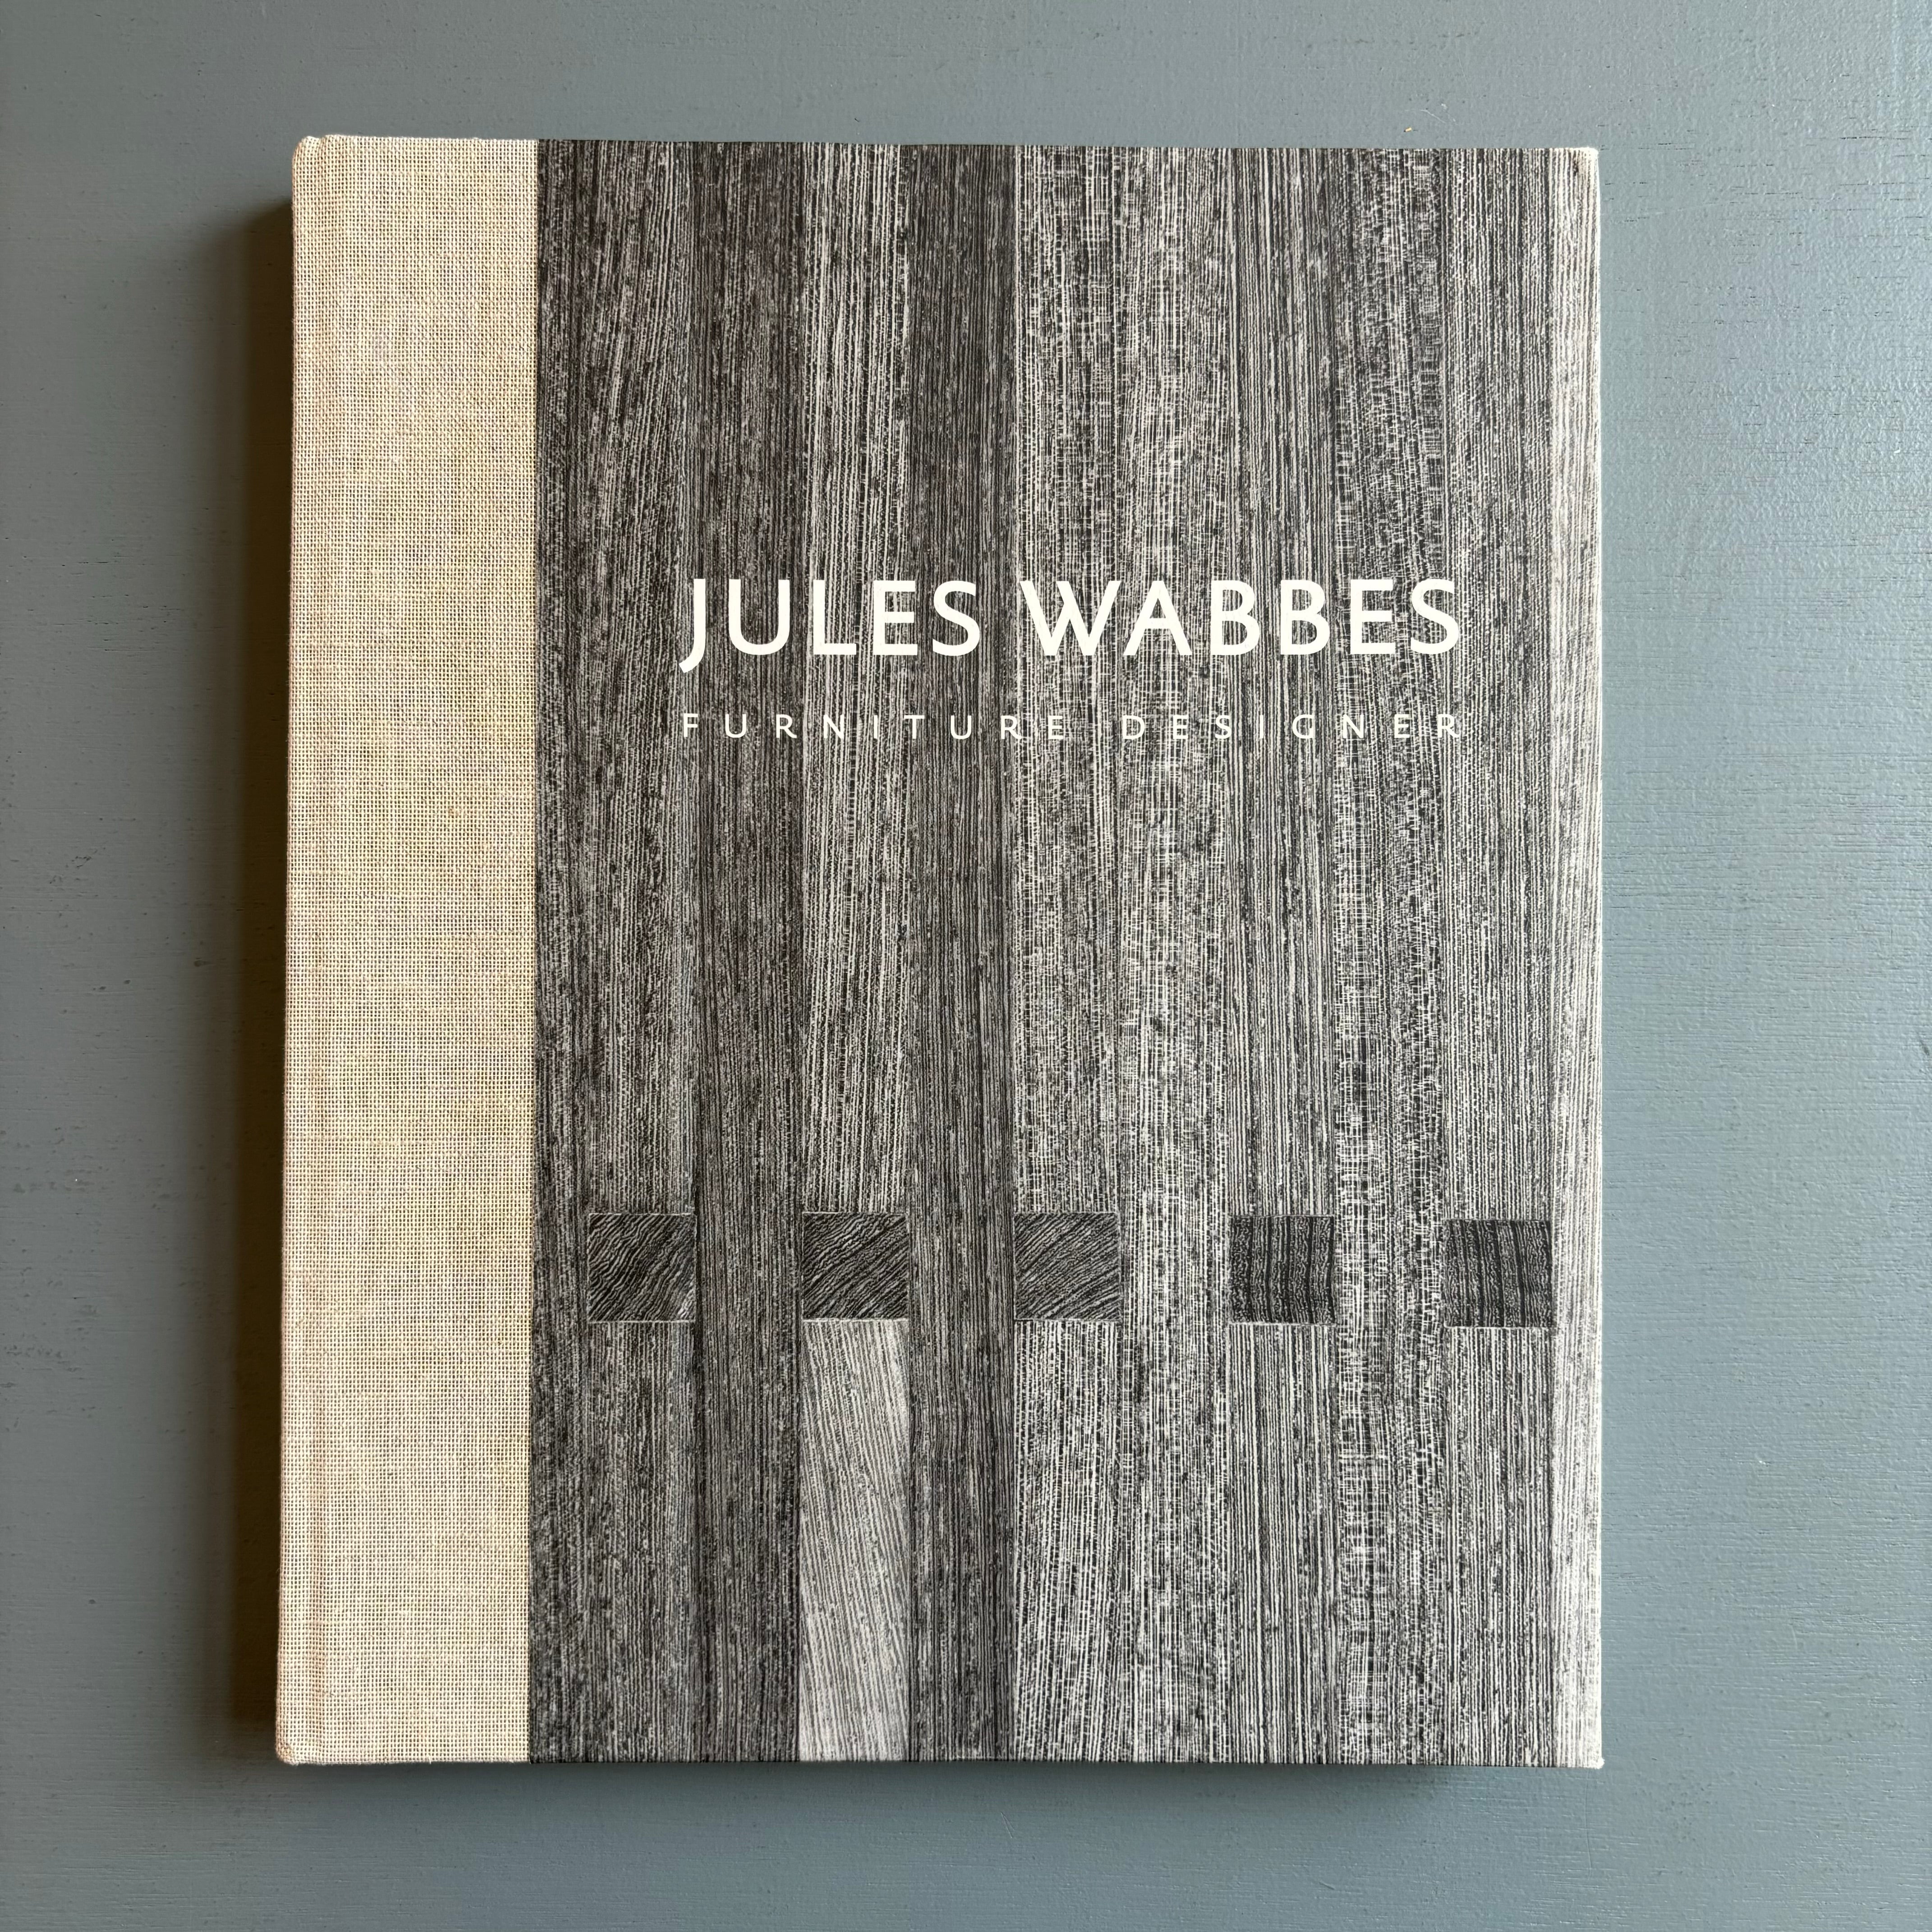 Jules Wabbes - Furniture designer - A+ editions 2012